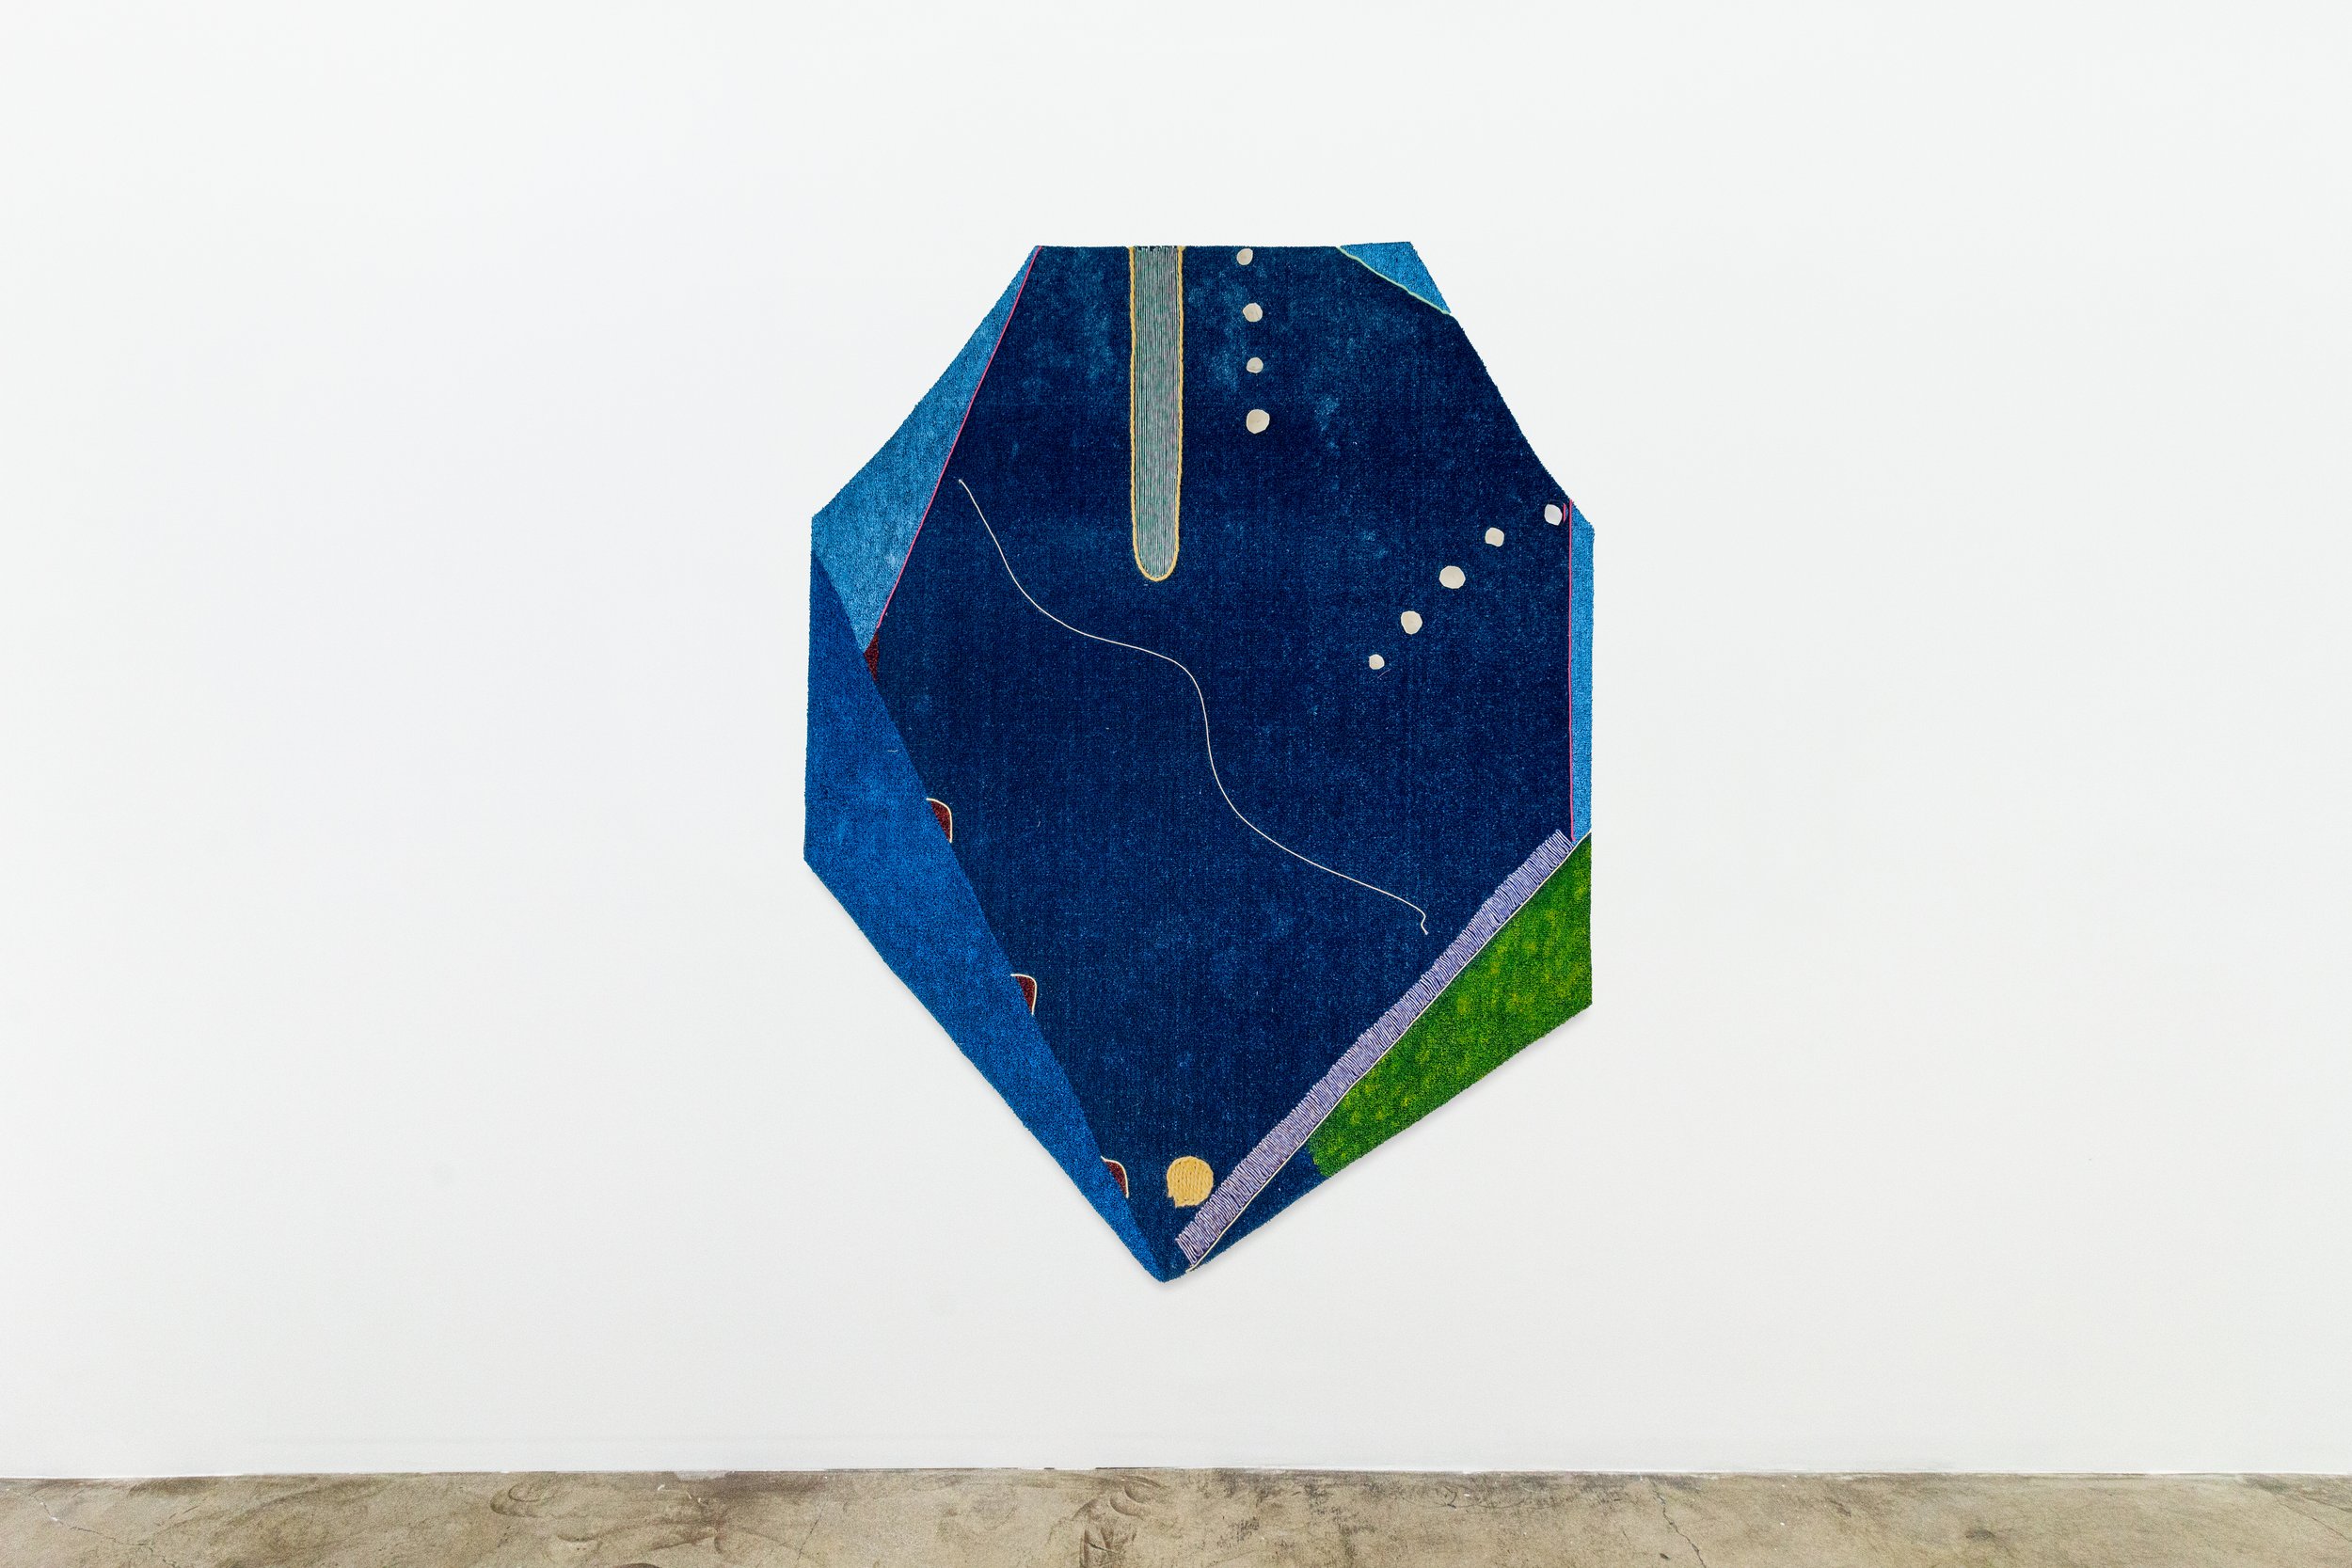  Teresa Baker  Spring Unforeseen , 2023 parfleche, yarn and acrylic on artificial turf 76 x 57 in. / 193.04 x 144.78 cm 